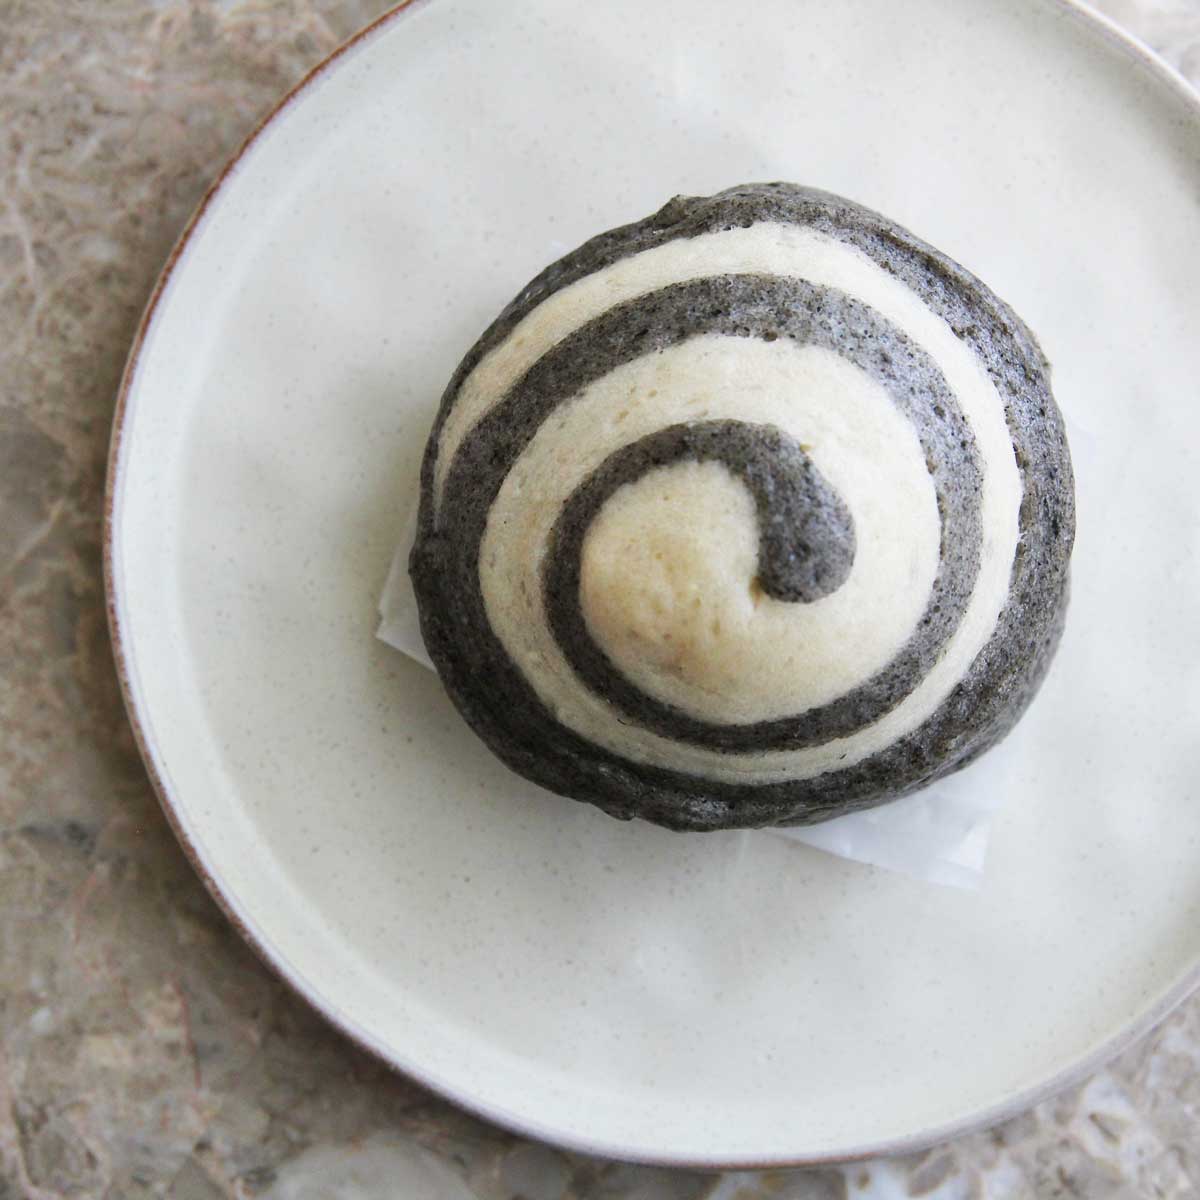 Homemade Black Sesame & Almond Milk Spiral Mantou (Vegan Steamed Buns Recipe) - Sticky Rice Potato Dumplings